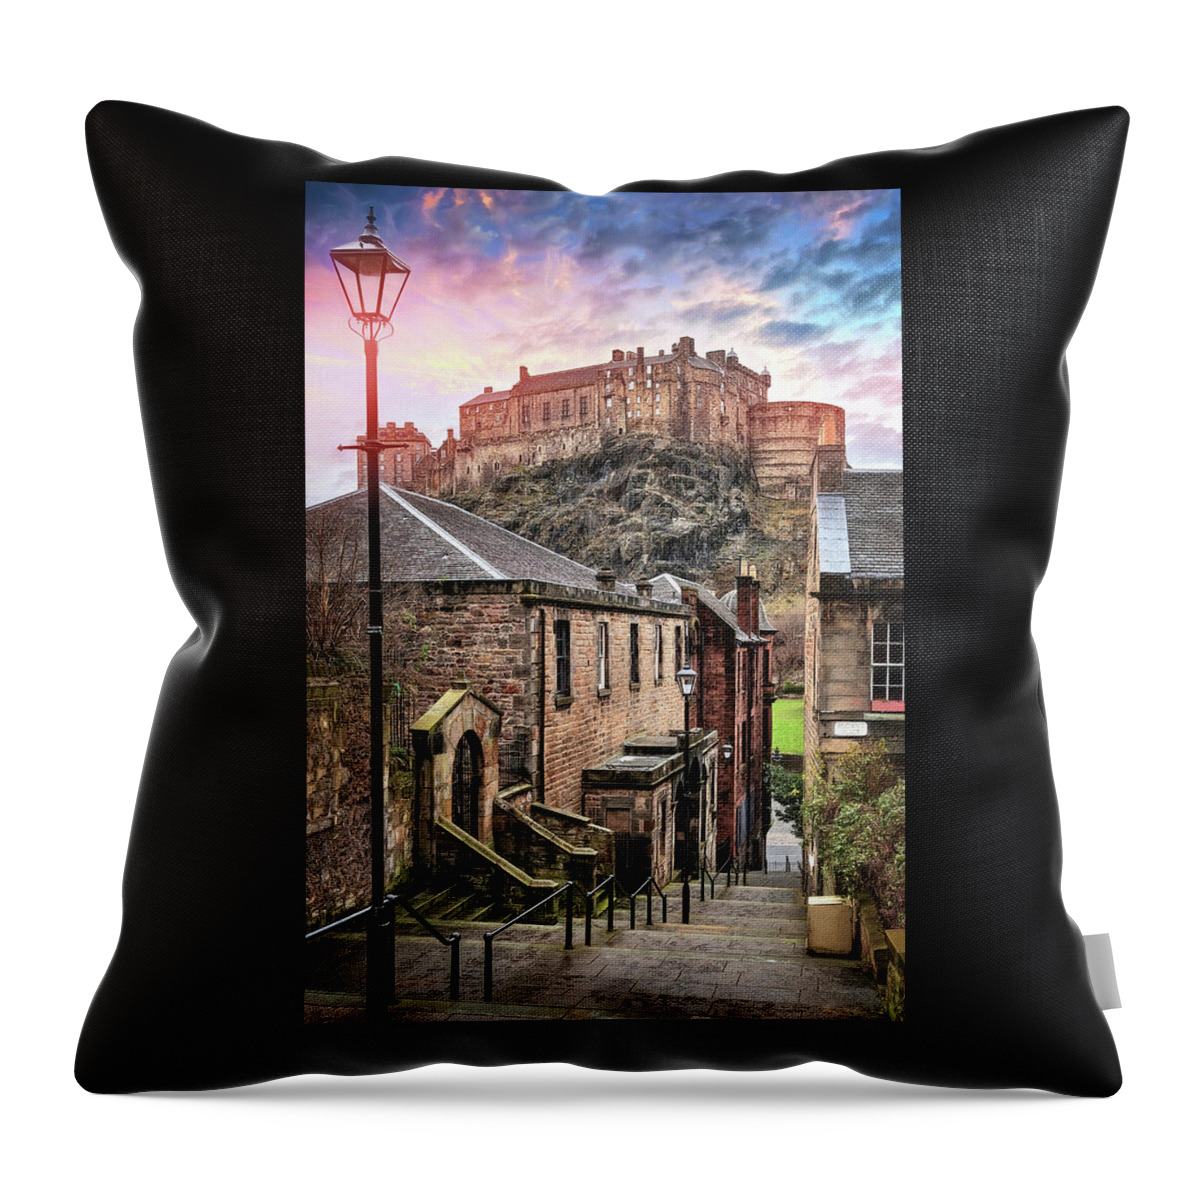 Edinburgh Castle Throw Pillow featuring the photograph Edinburgh Castle From The Vennel Scotland by Carol Japp